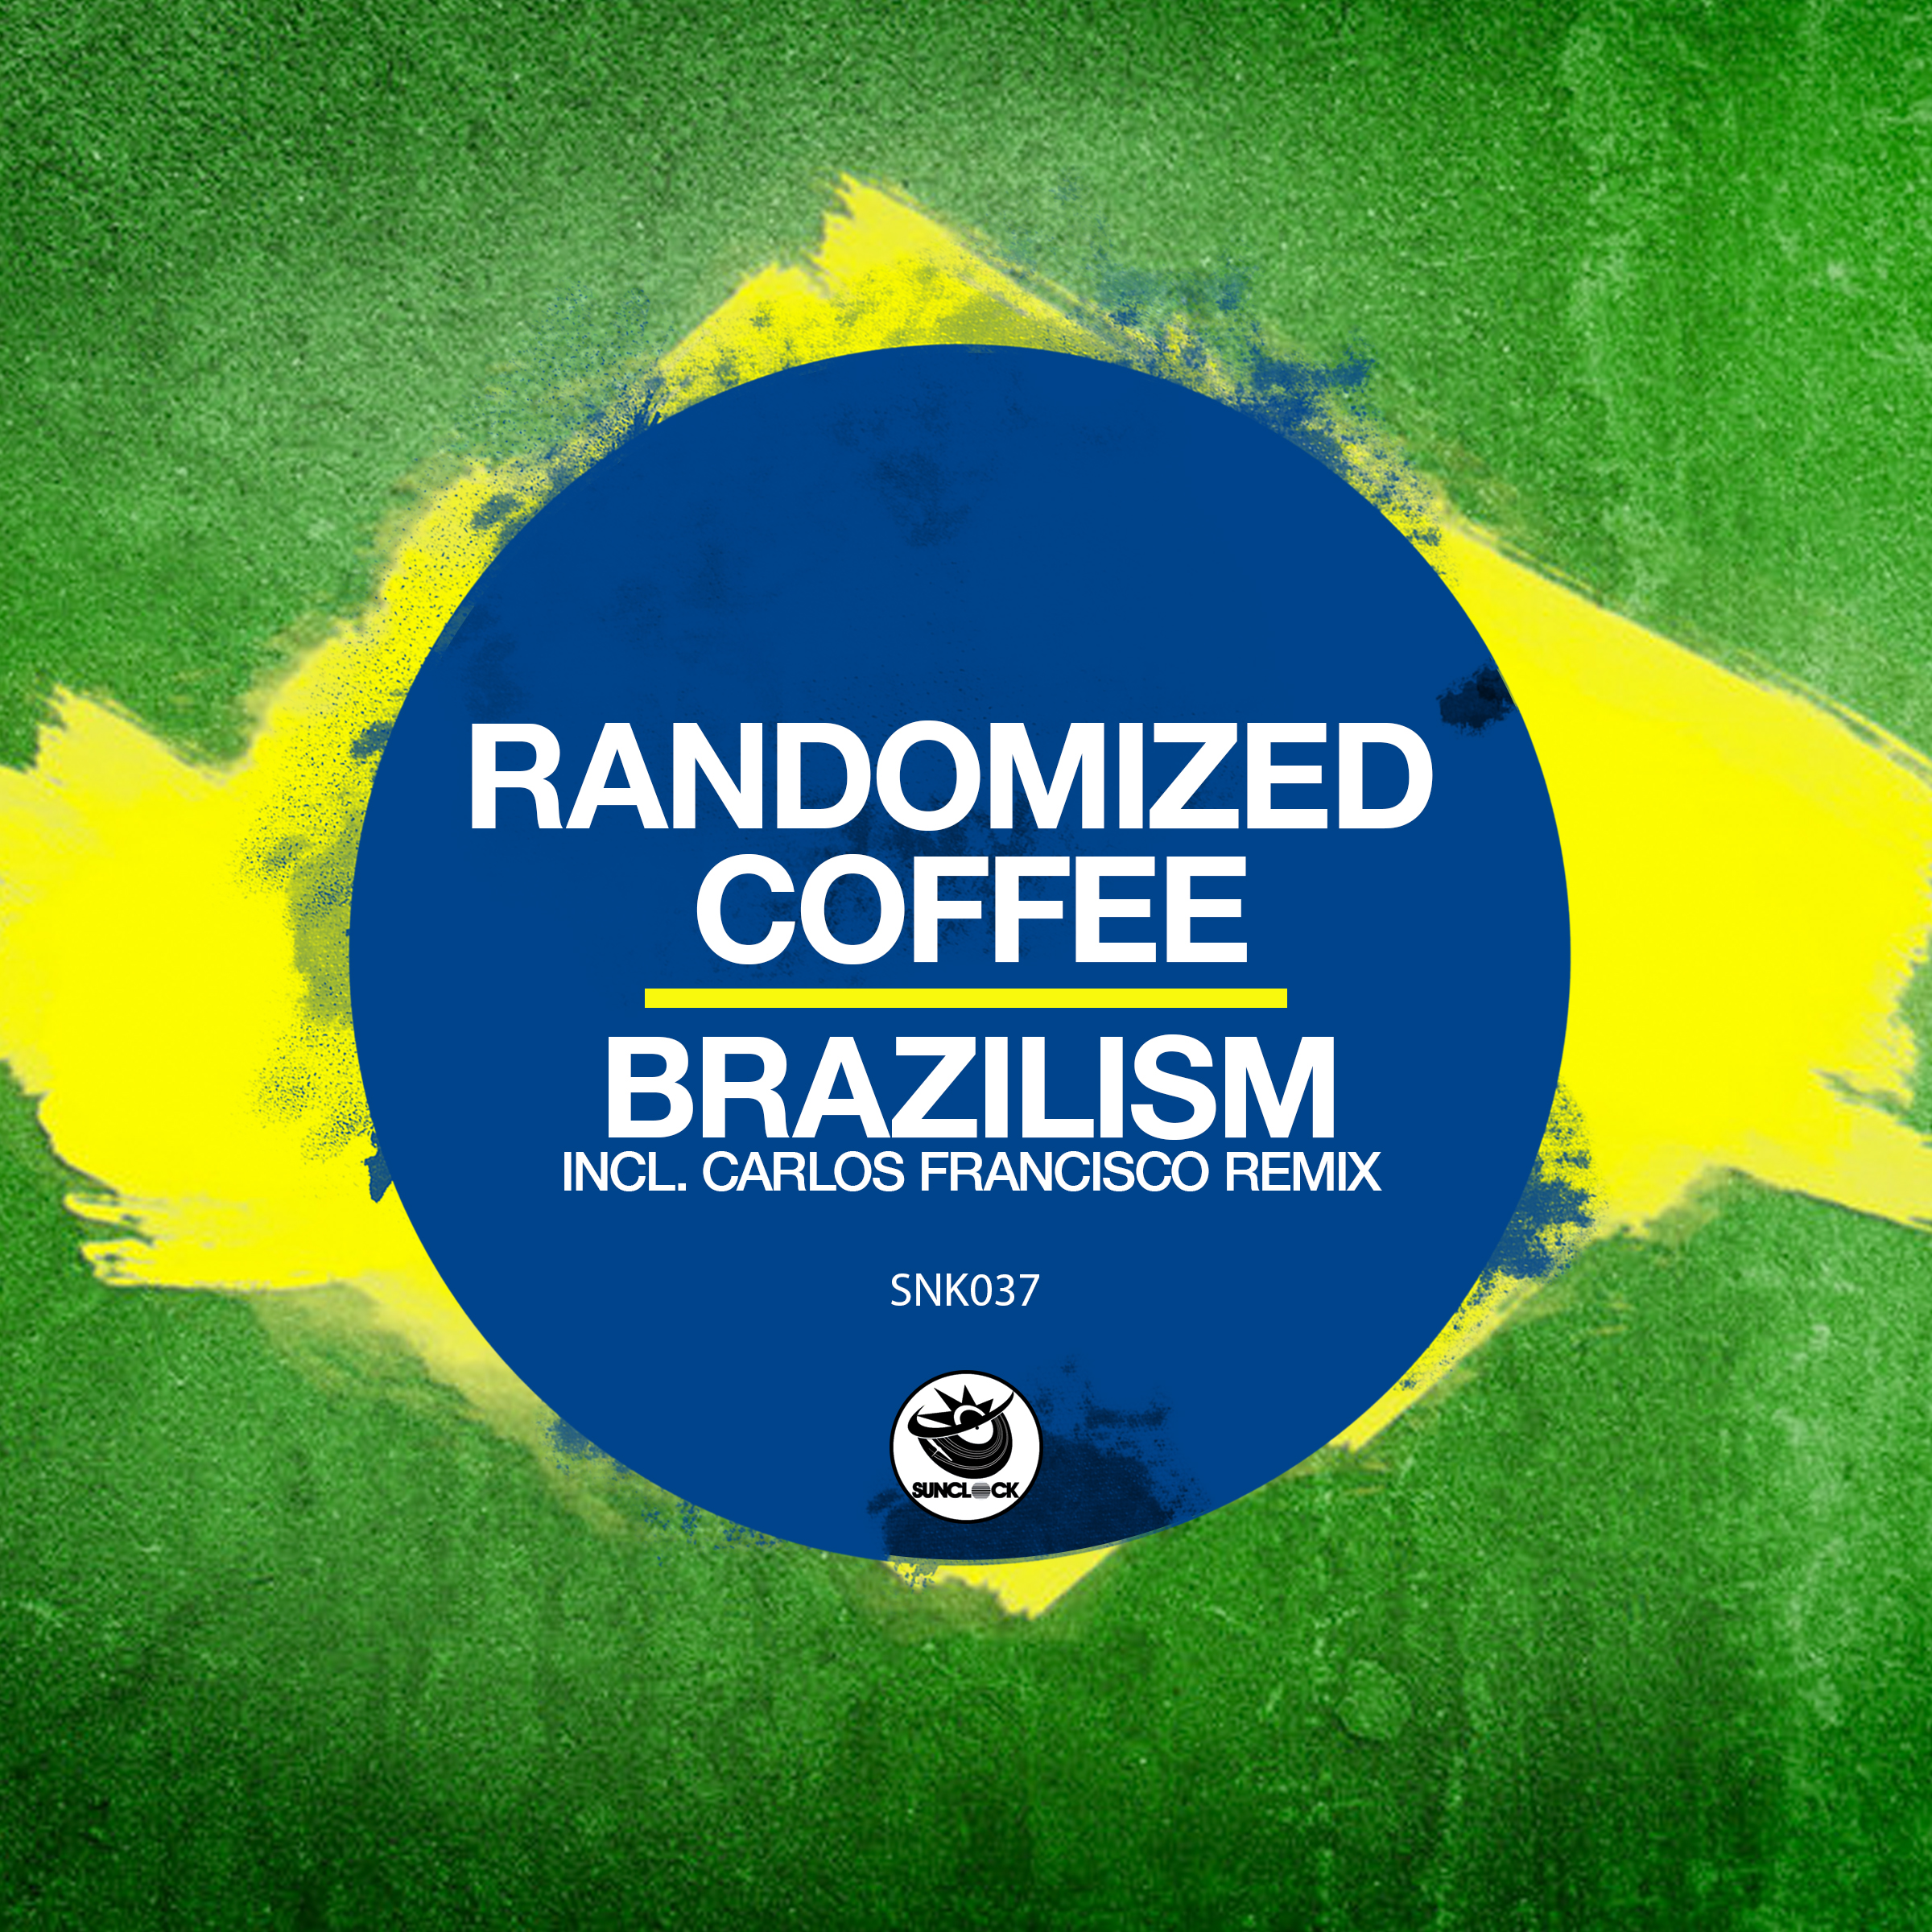 Randomized Coffee - Brazilism (incl. Carlos Francisco Remix) - SNK037 Cover